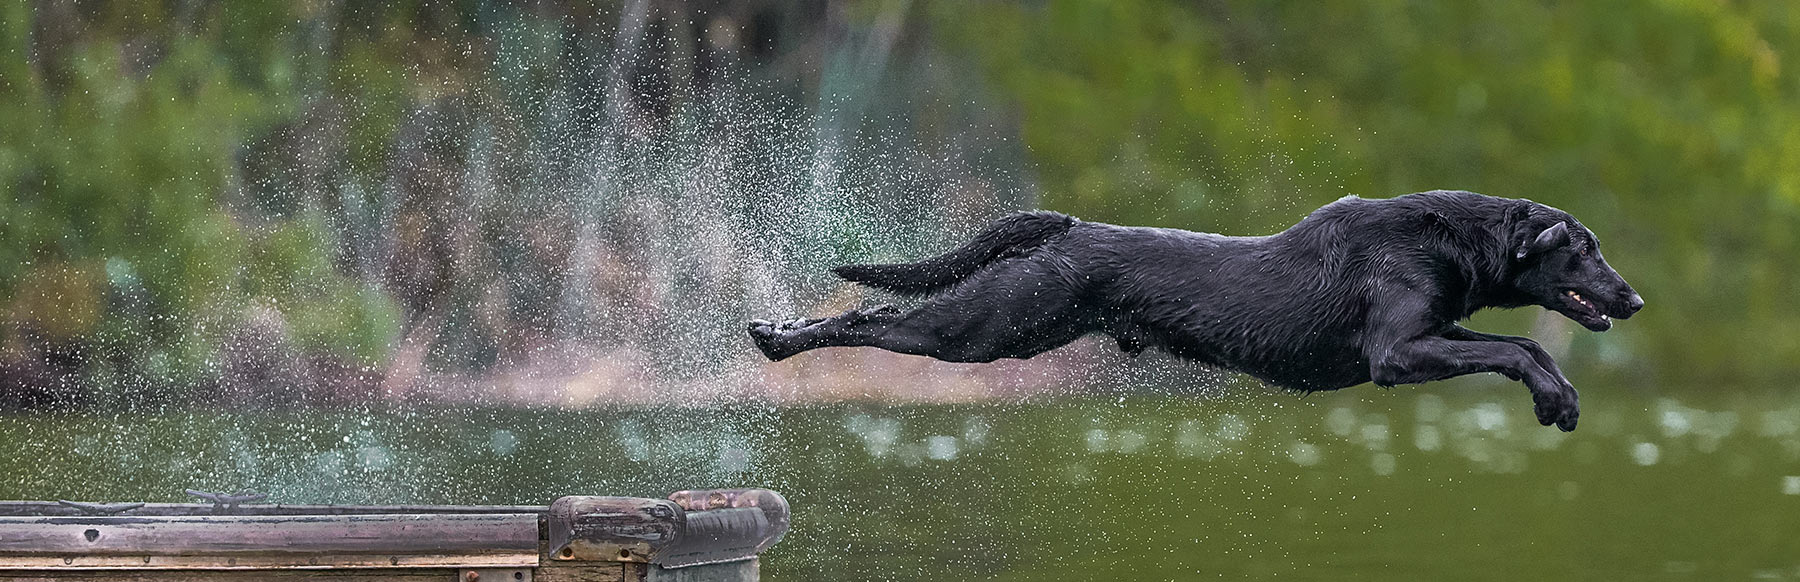 A-portrait-of-a-Black-Labrador-dog-jumping-off-a-bridge-into-a-lake